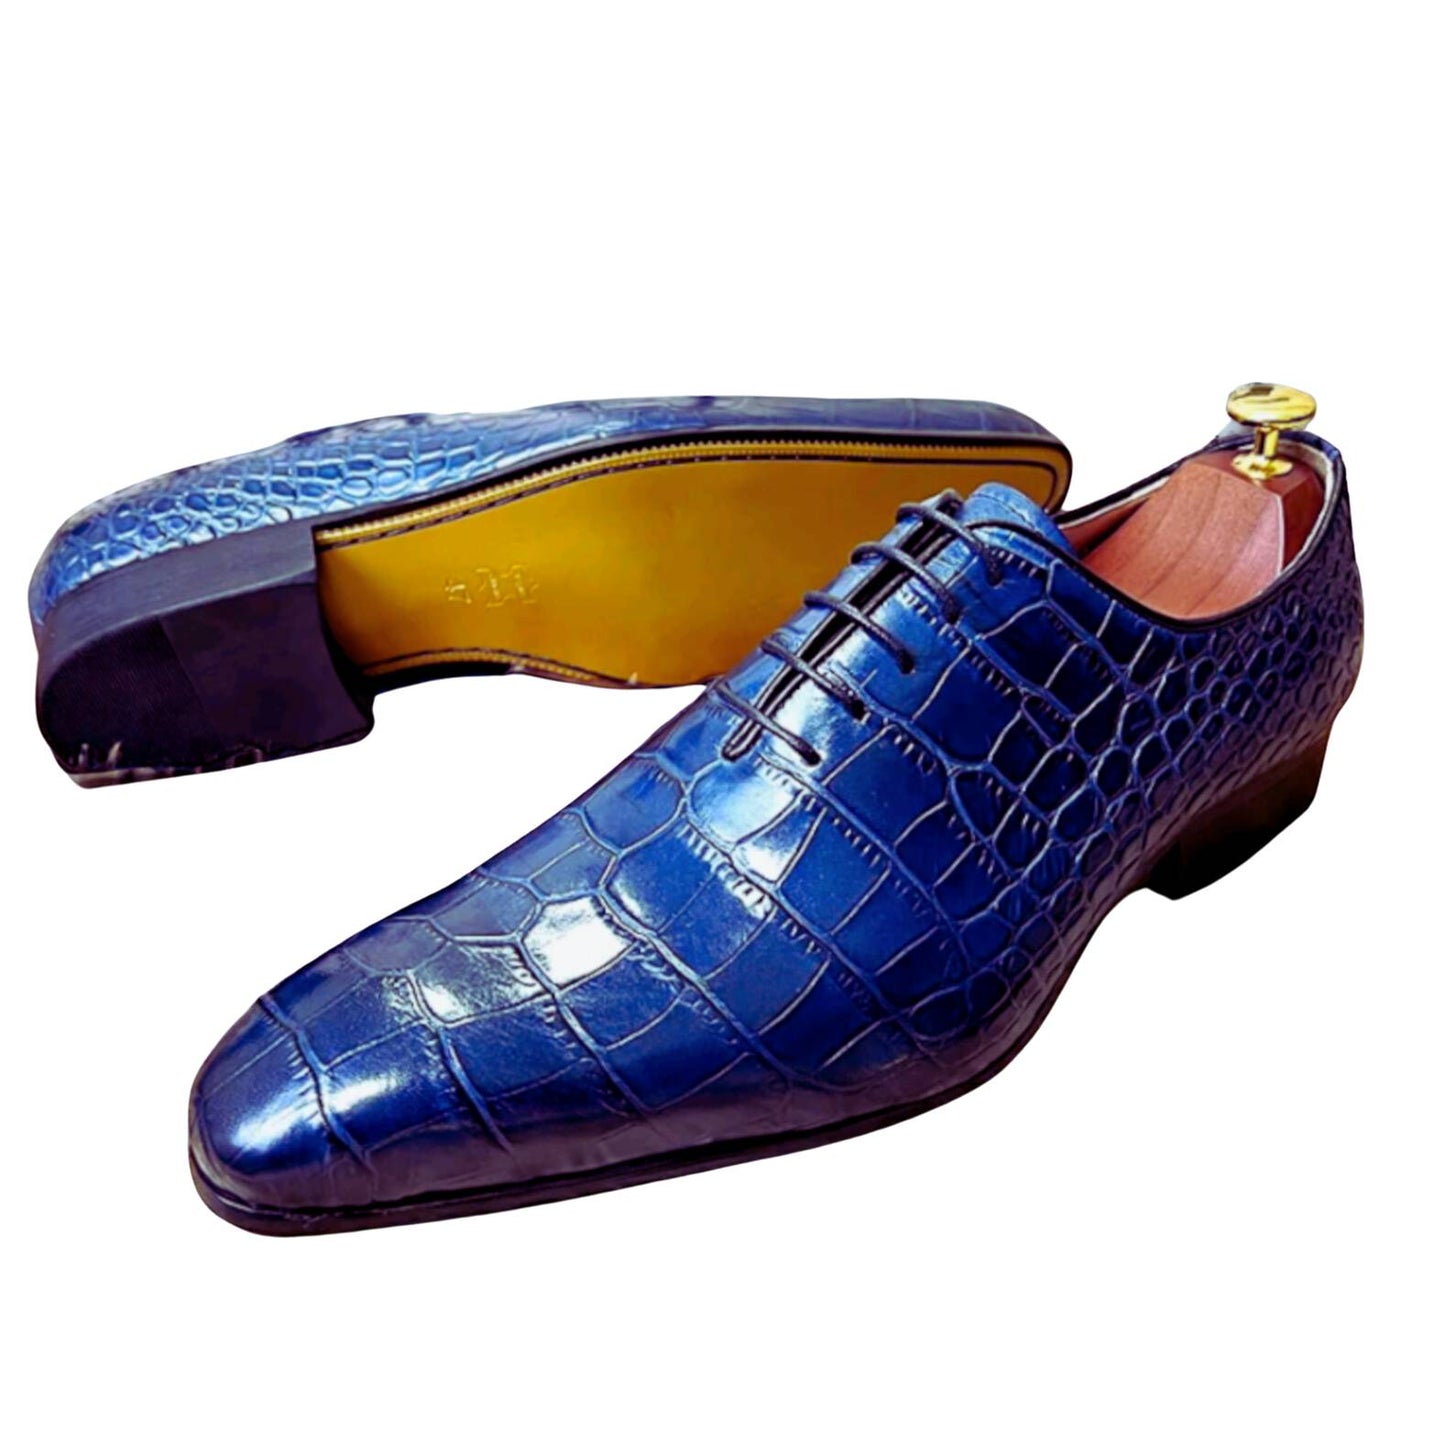 Dress Shoes Crocodile Pattren Prints Leather Handmade for Men